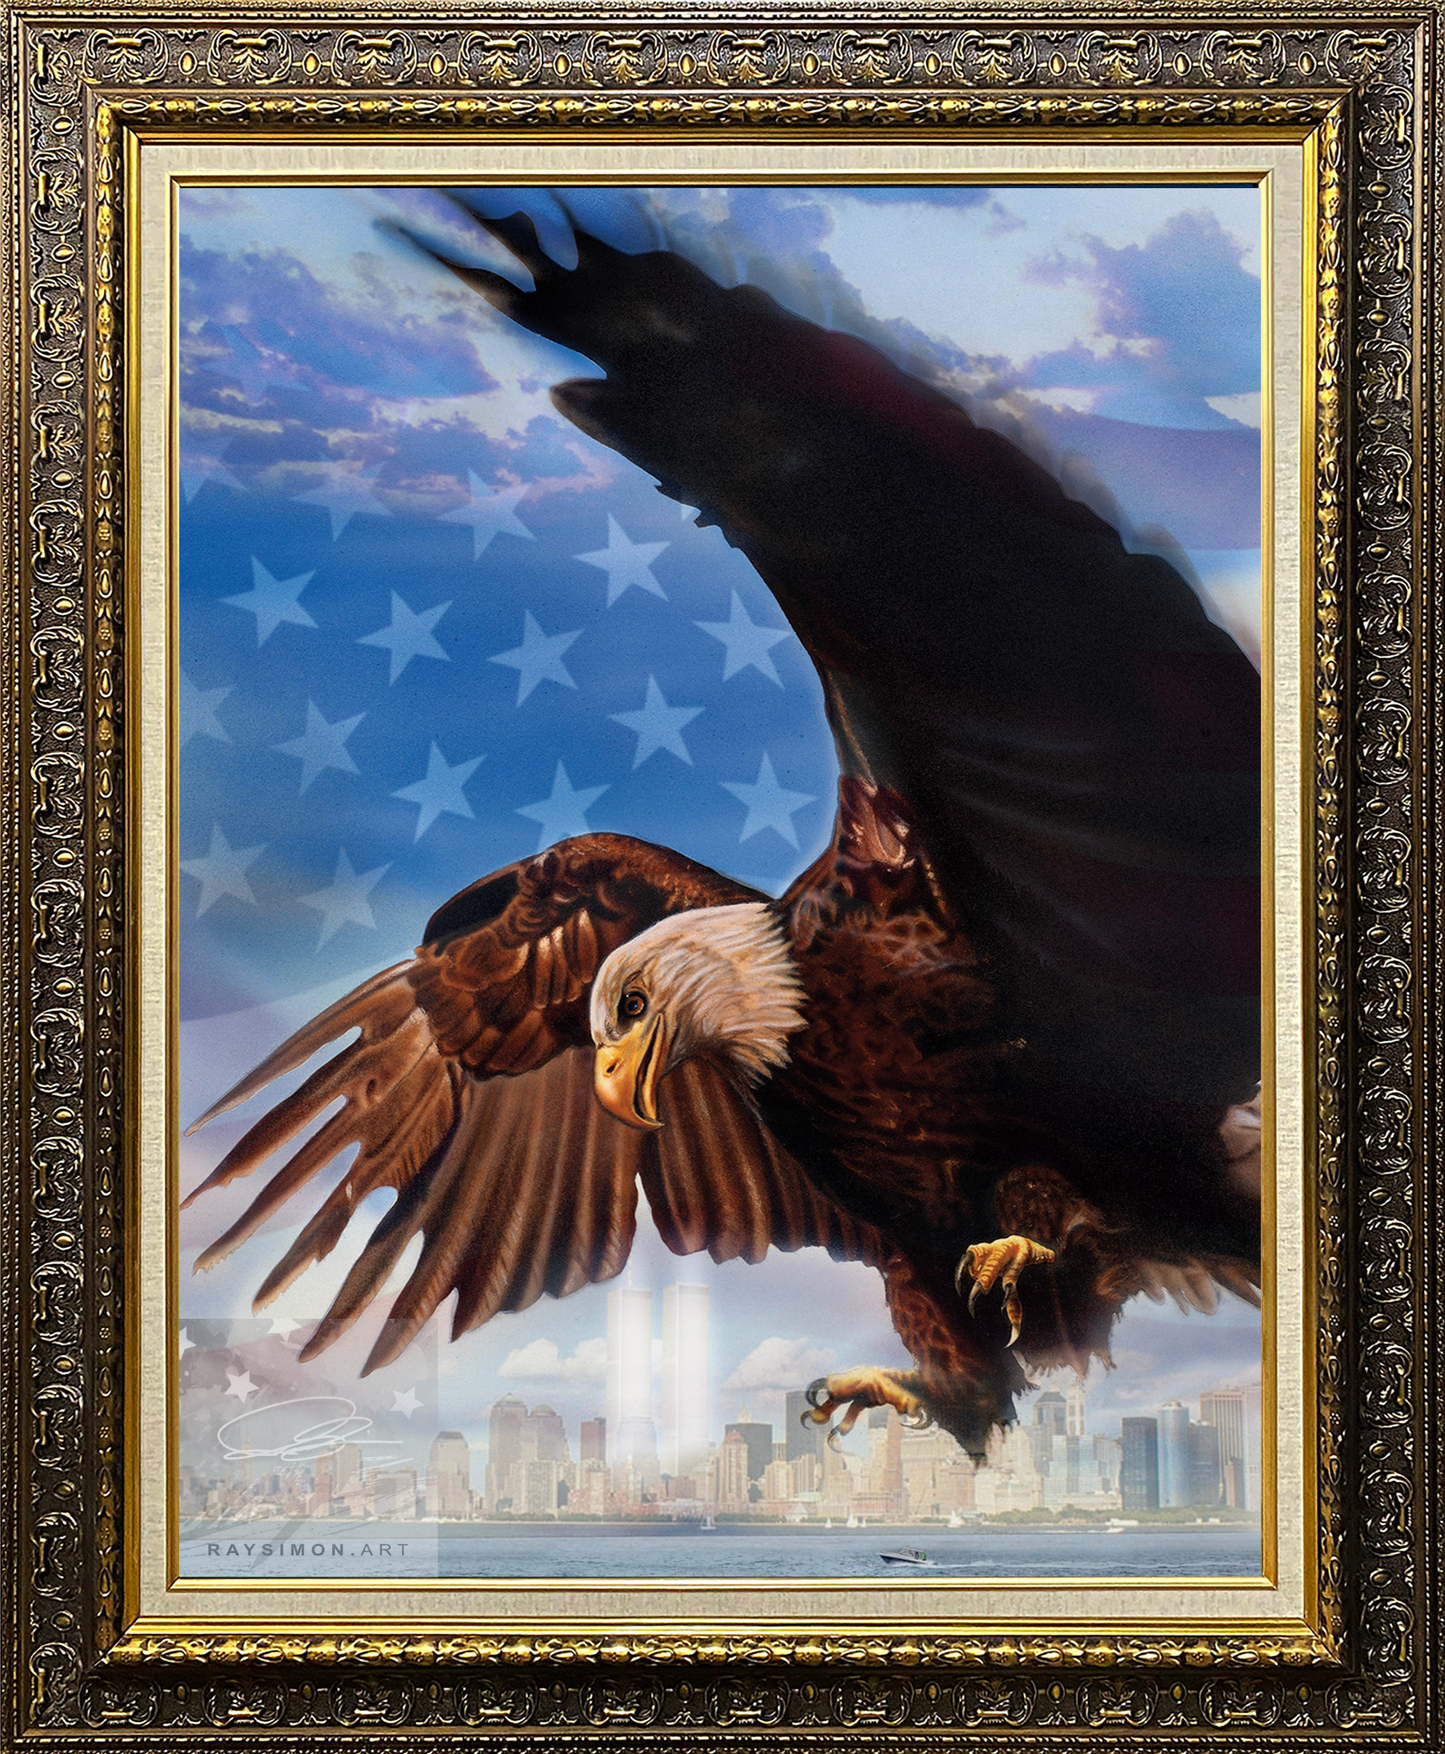 9/11 Art - 'United We Stand'